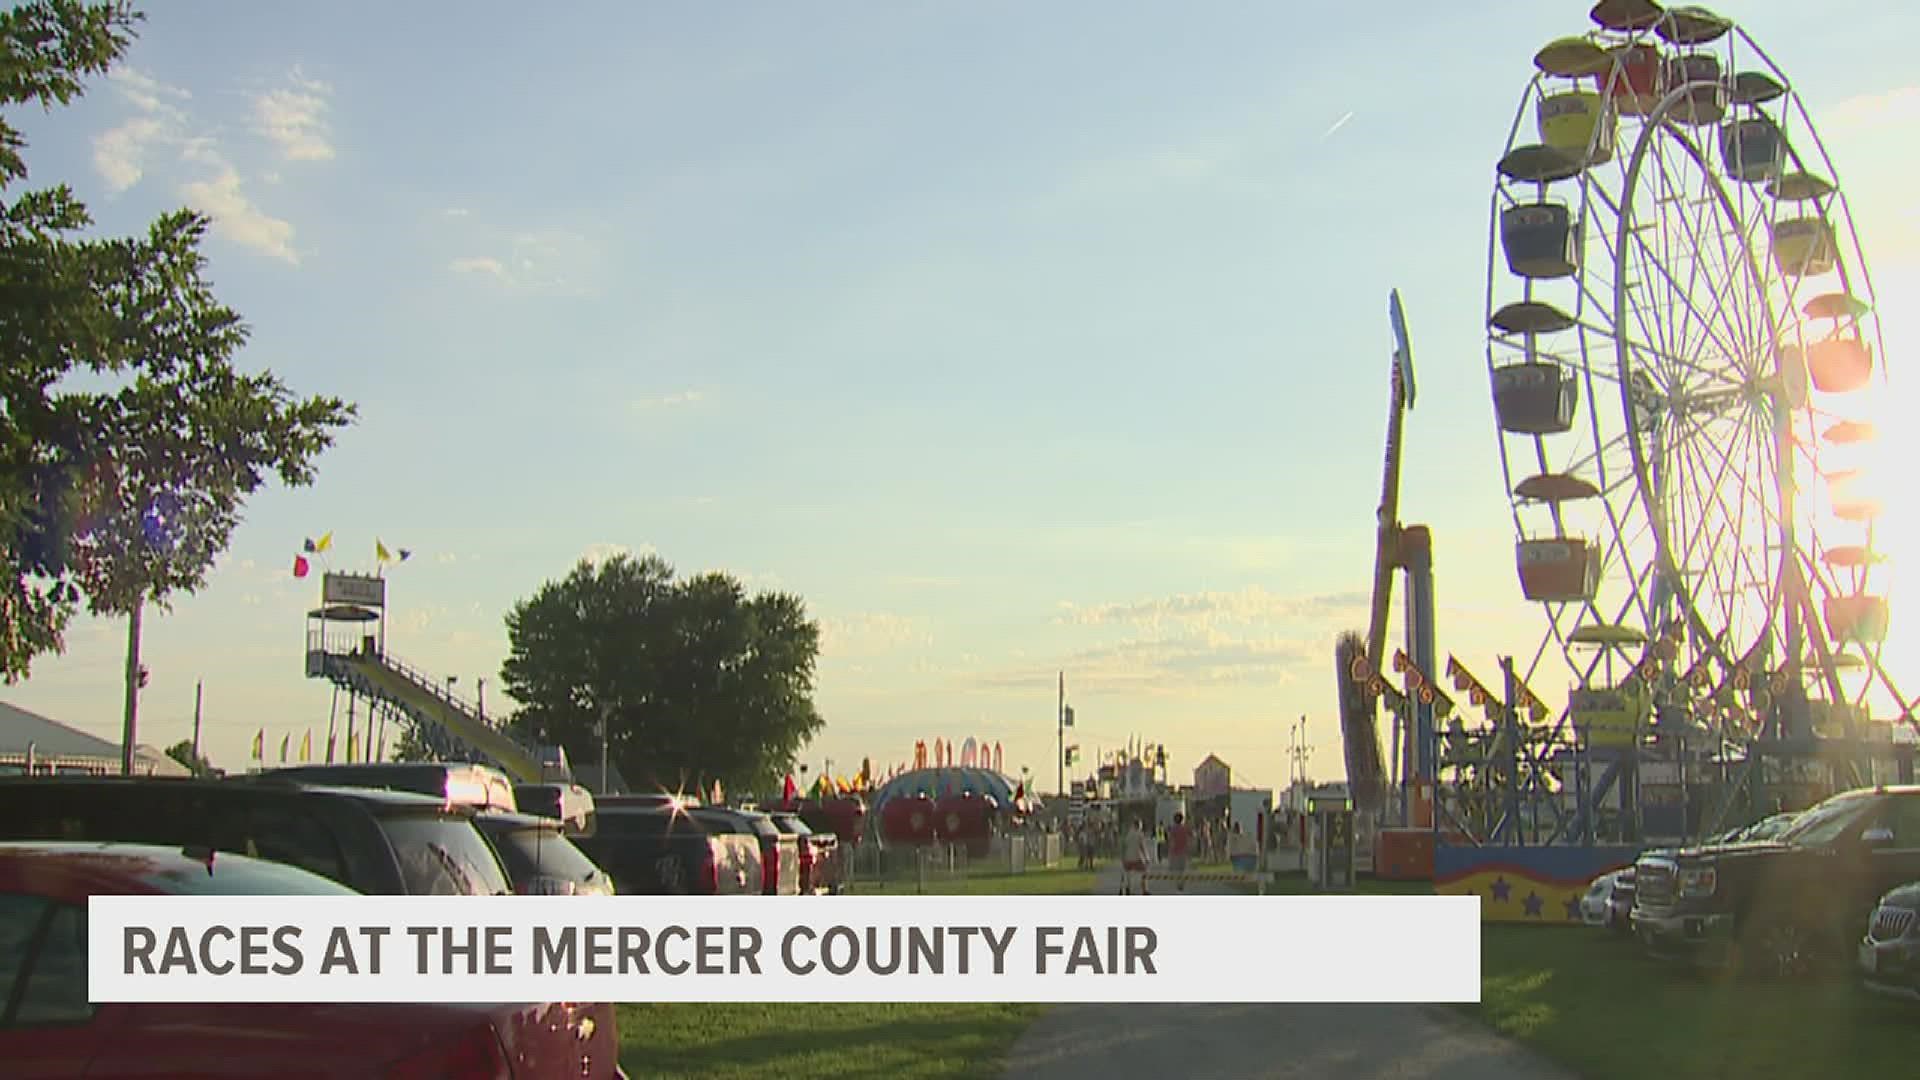 Mercer County fairgoers enjoy summer fair activities, races